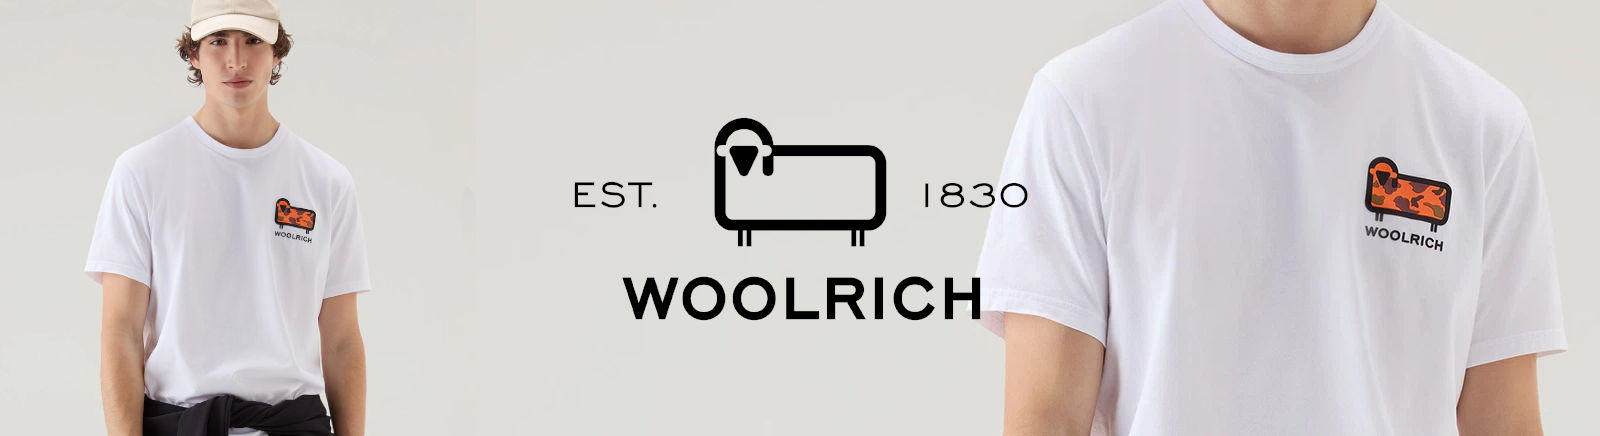 Prange: Woolrich Herren Boots online shoppen